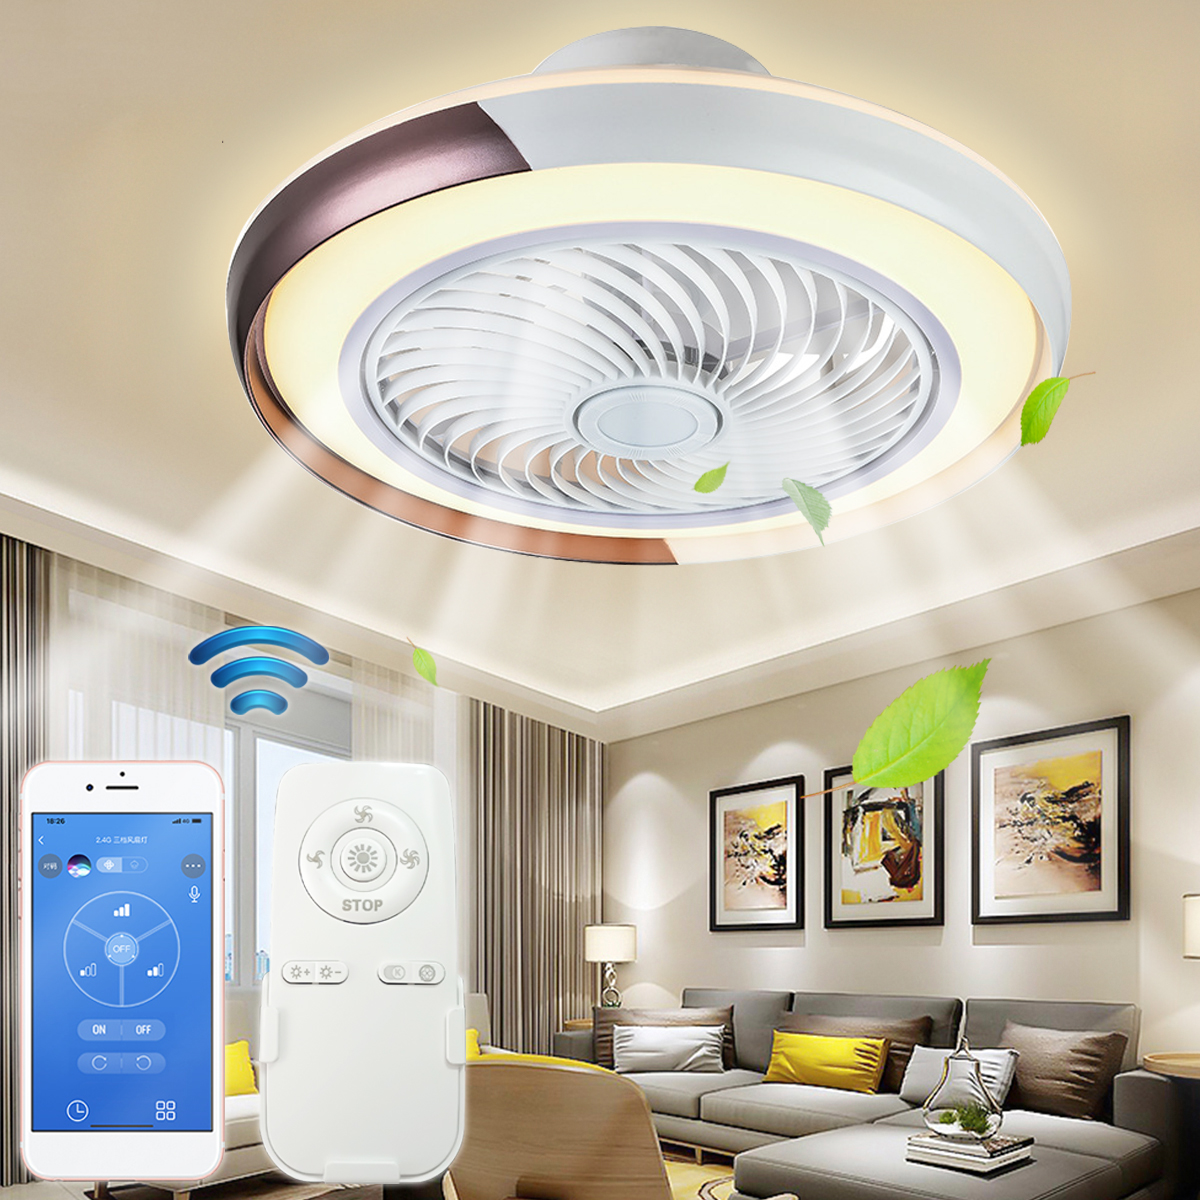 LED-Fan-Ceiling-Light-WiFi-Dimmable-Bedroom-Lamp-APPRemote-Control-220V-1861721-2